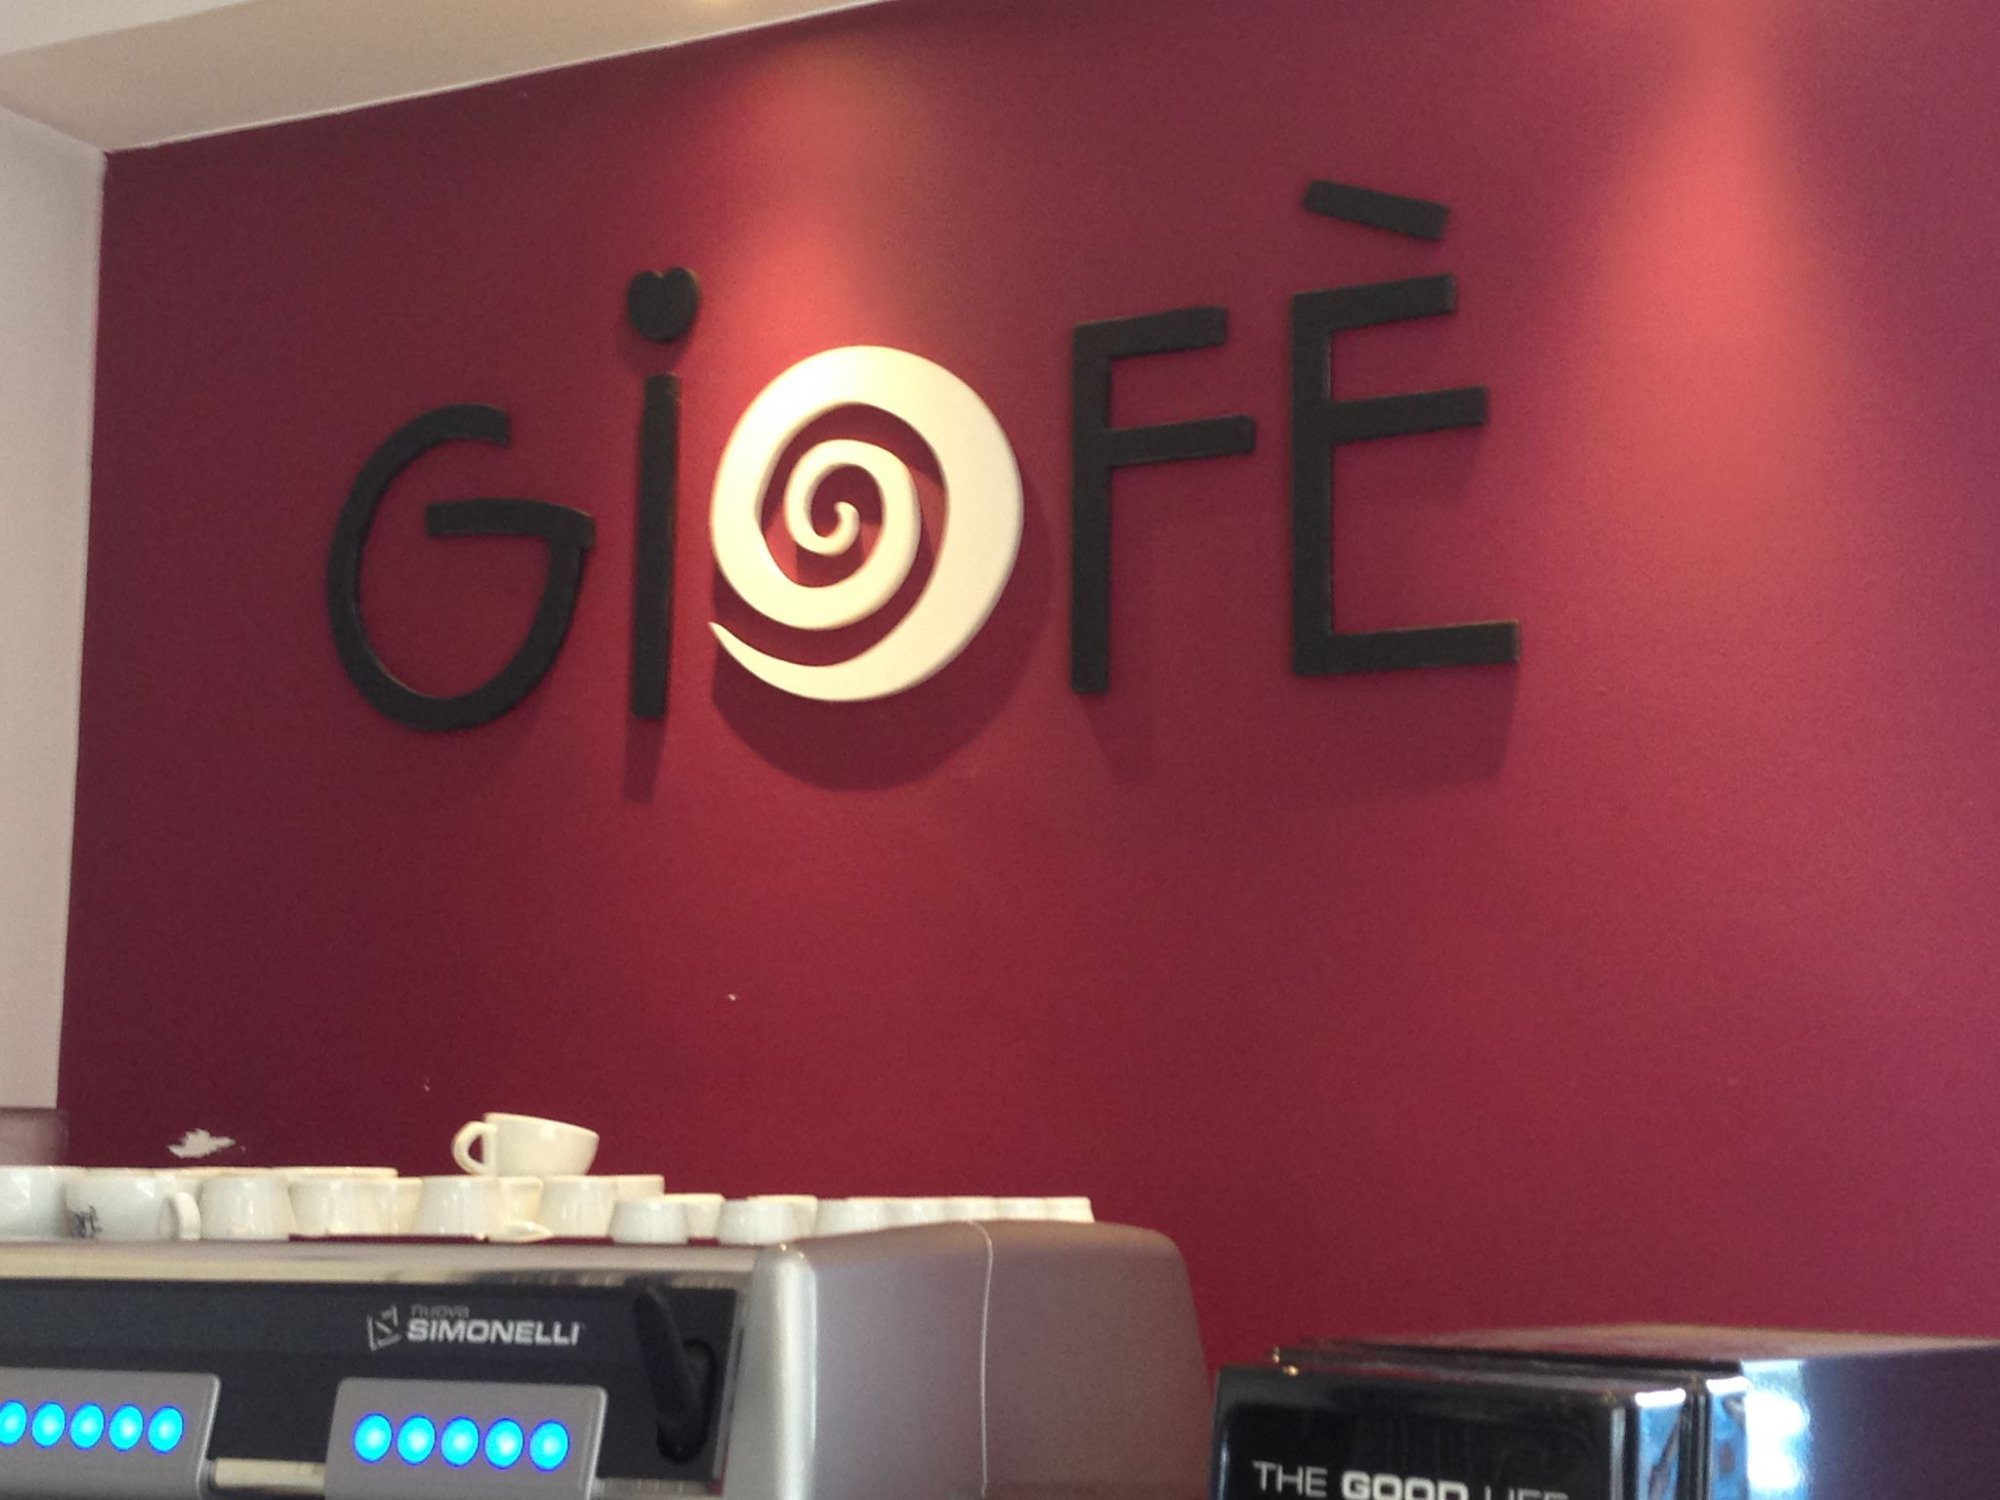 Caffe Giofe, Bari